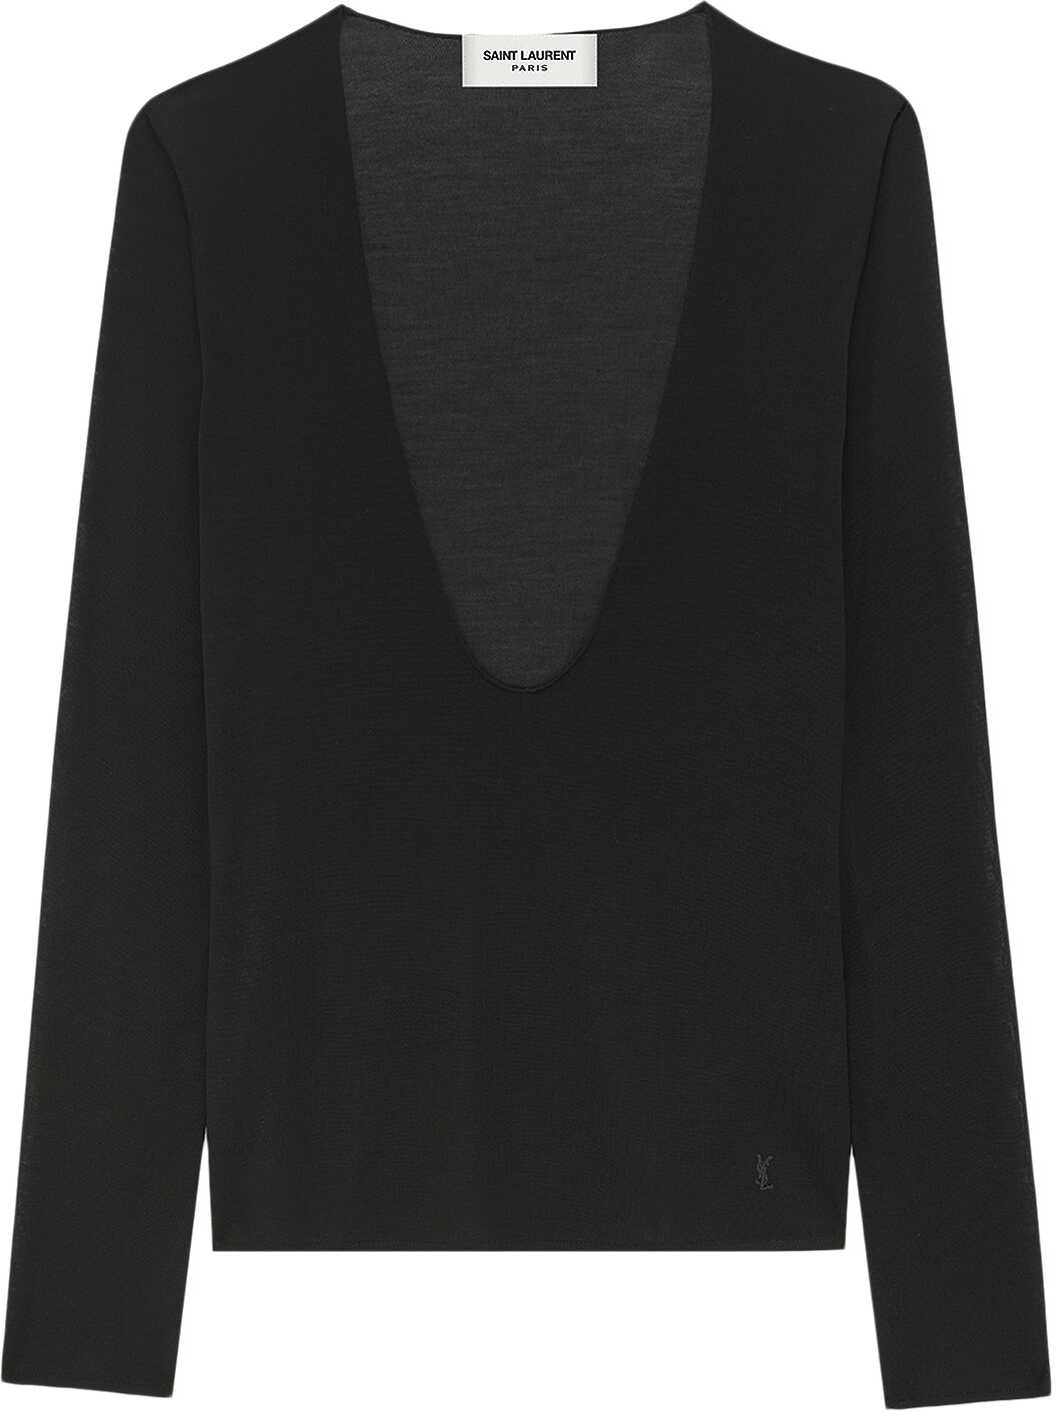 Saint Laurent Sweater Black